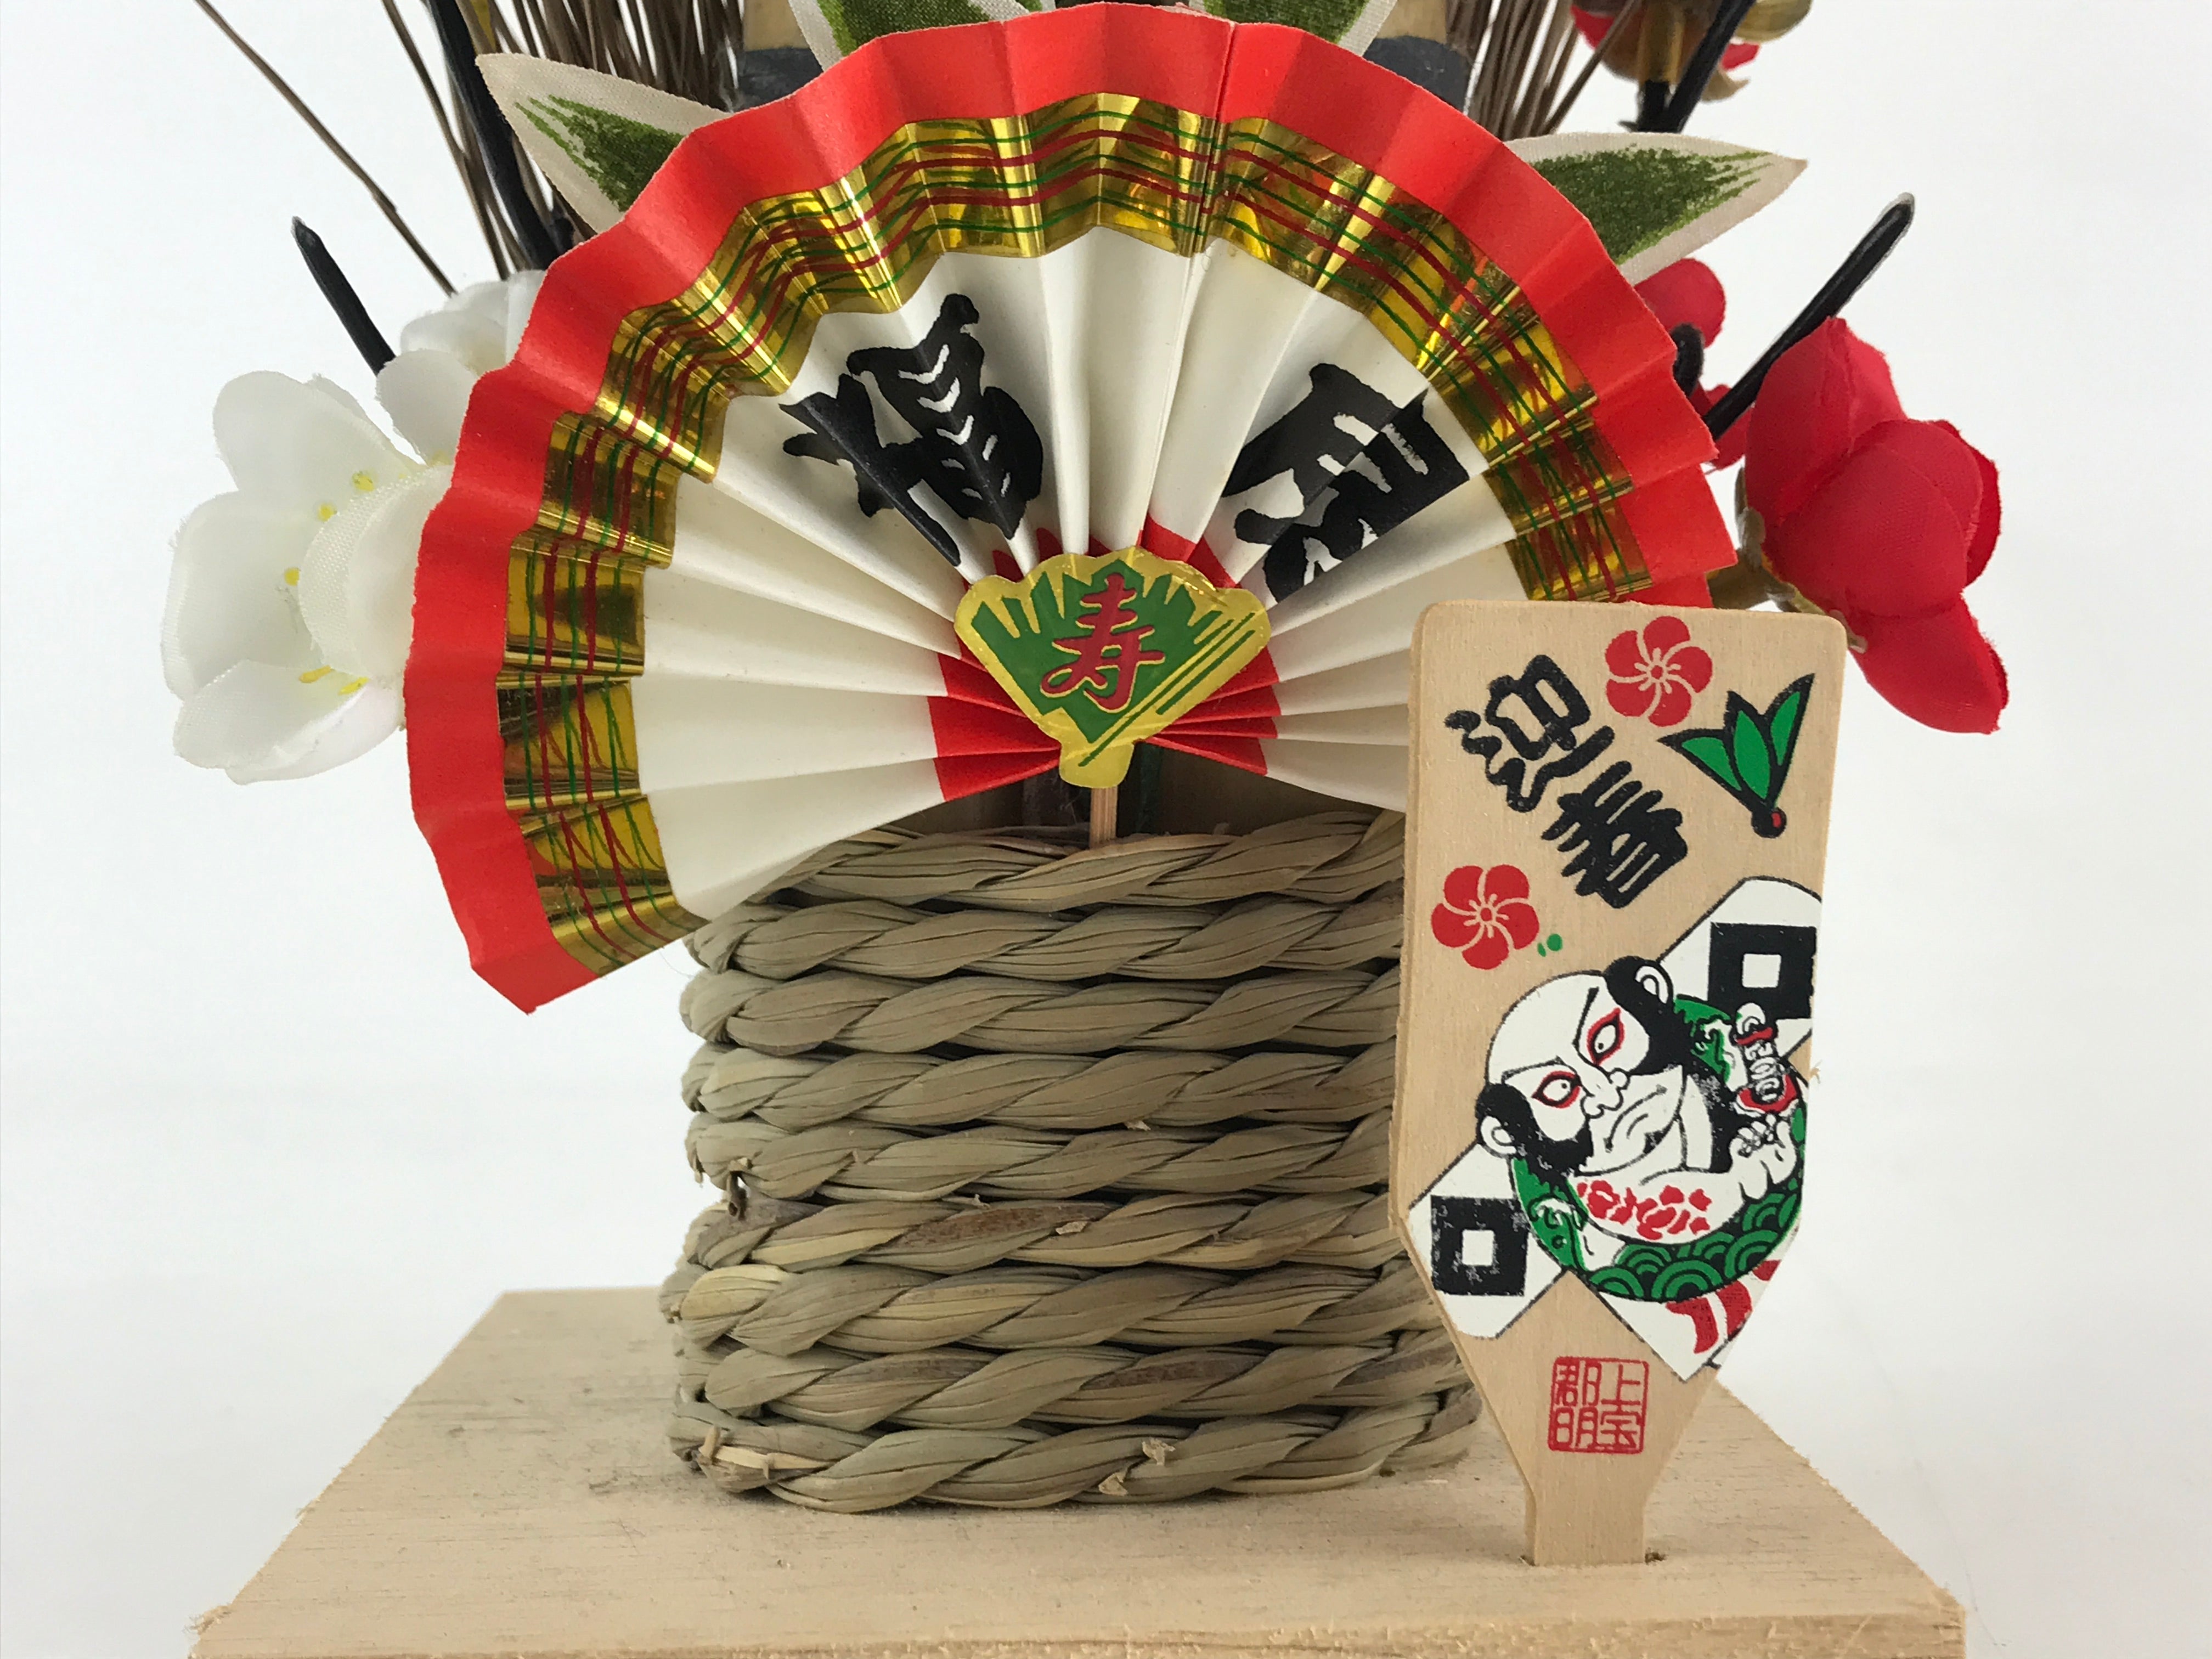 Japanese New Year's Decoration Kadomatsu Vtg Good Luck Longevity Amulet BD865